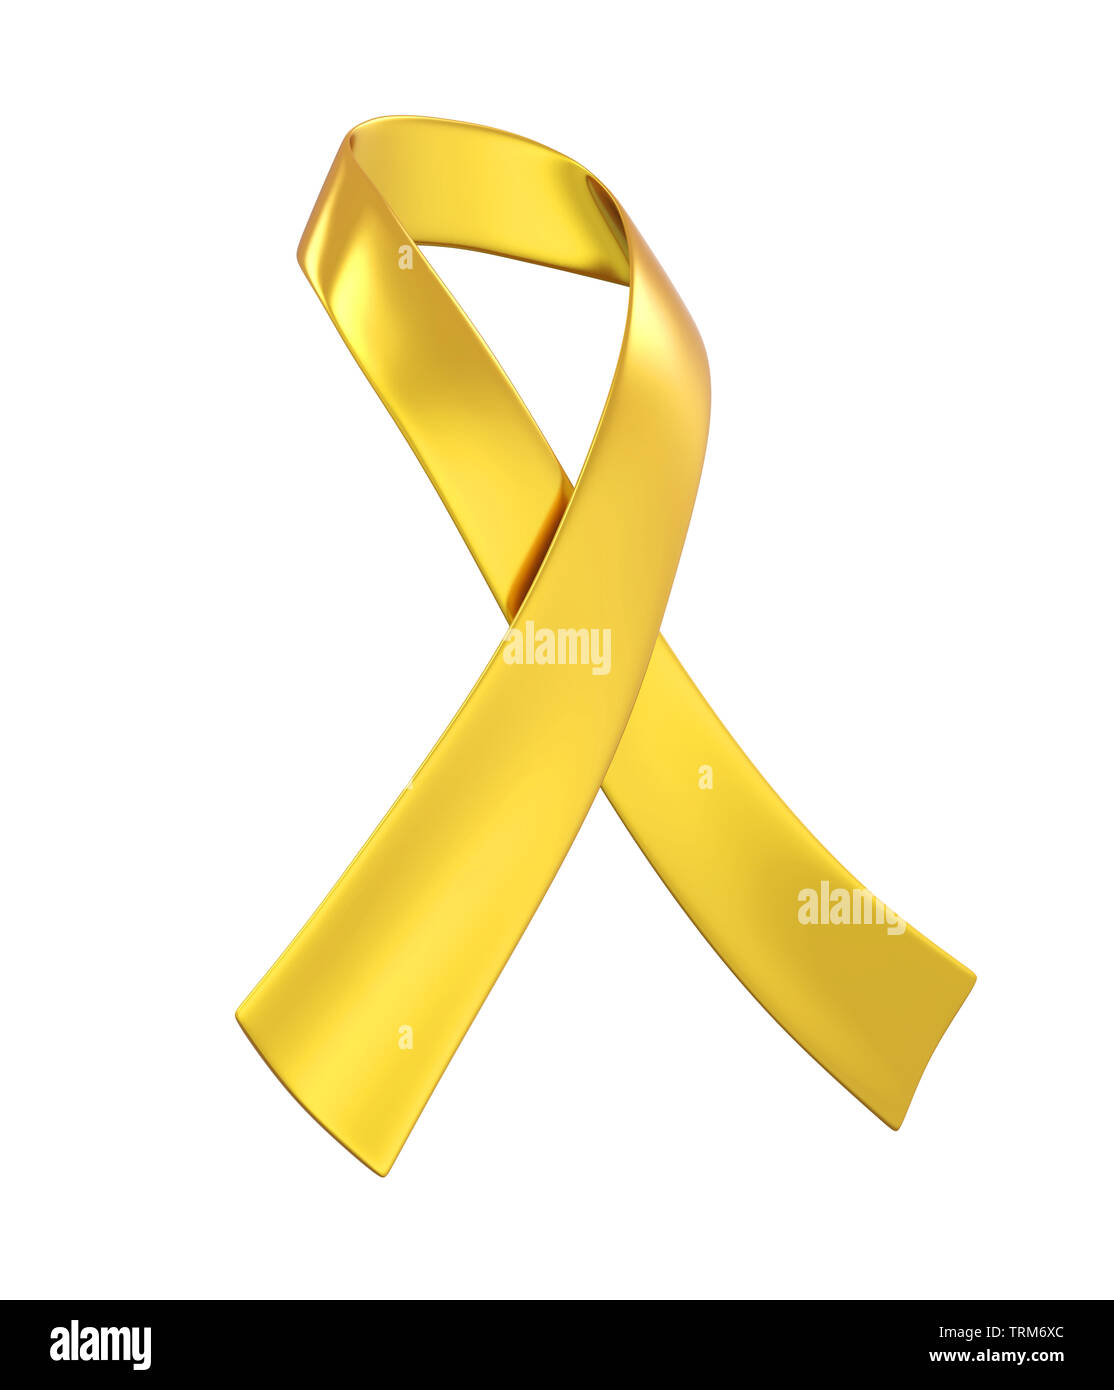 Childhood Cancer Awareness Ribbon Isolated Stock Photo